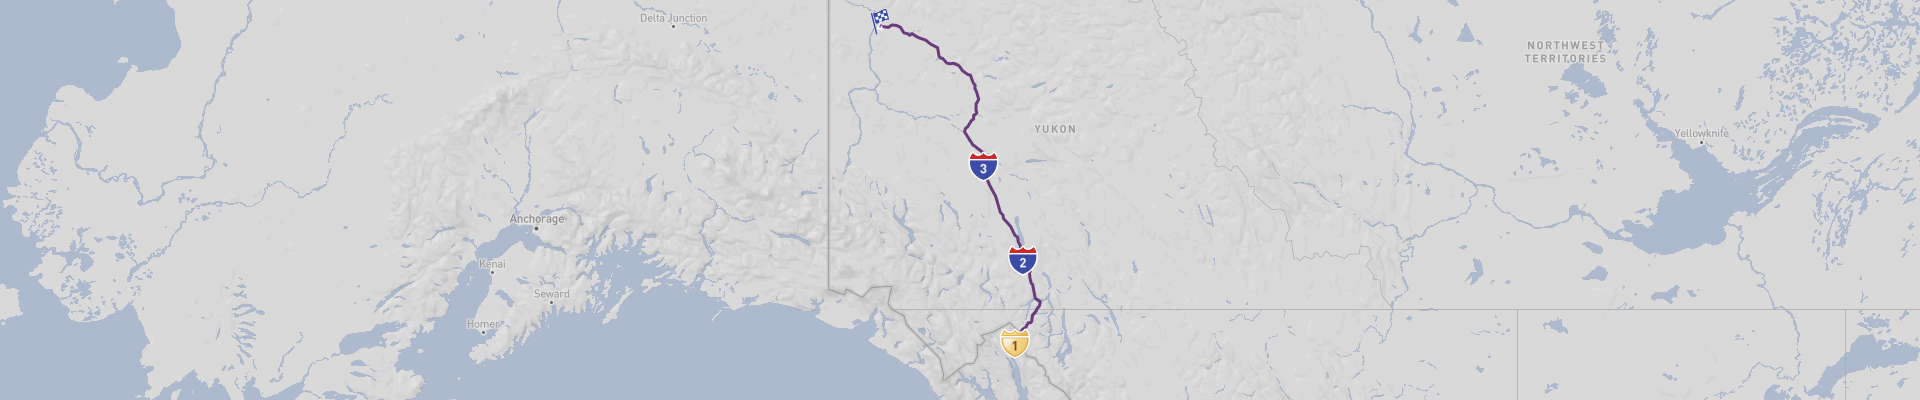 Ruta del Klondike Itinerario